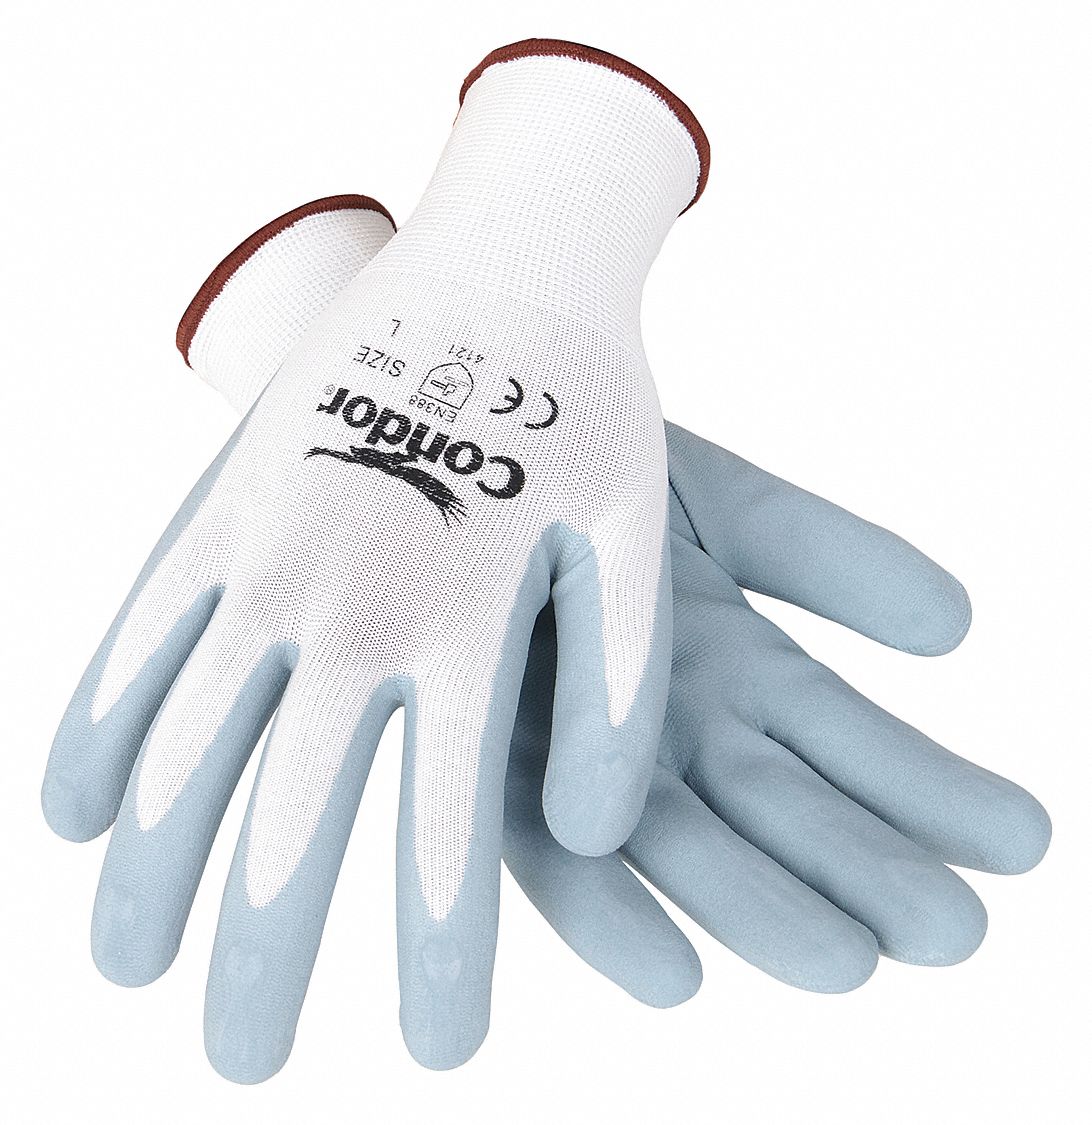 CONDOR 5PE89 Coated Gloves,M,Gray/White,PR 